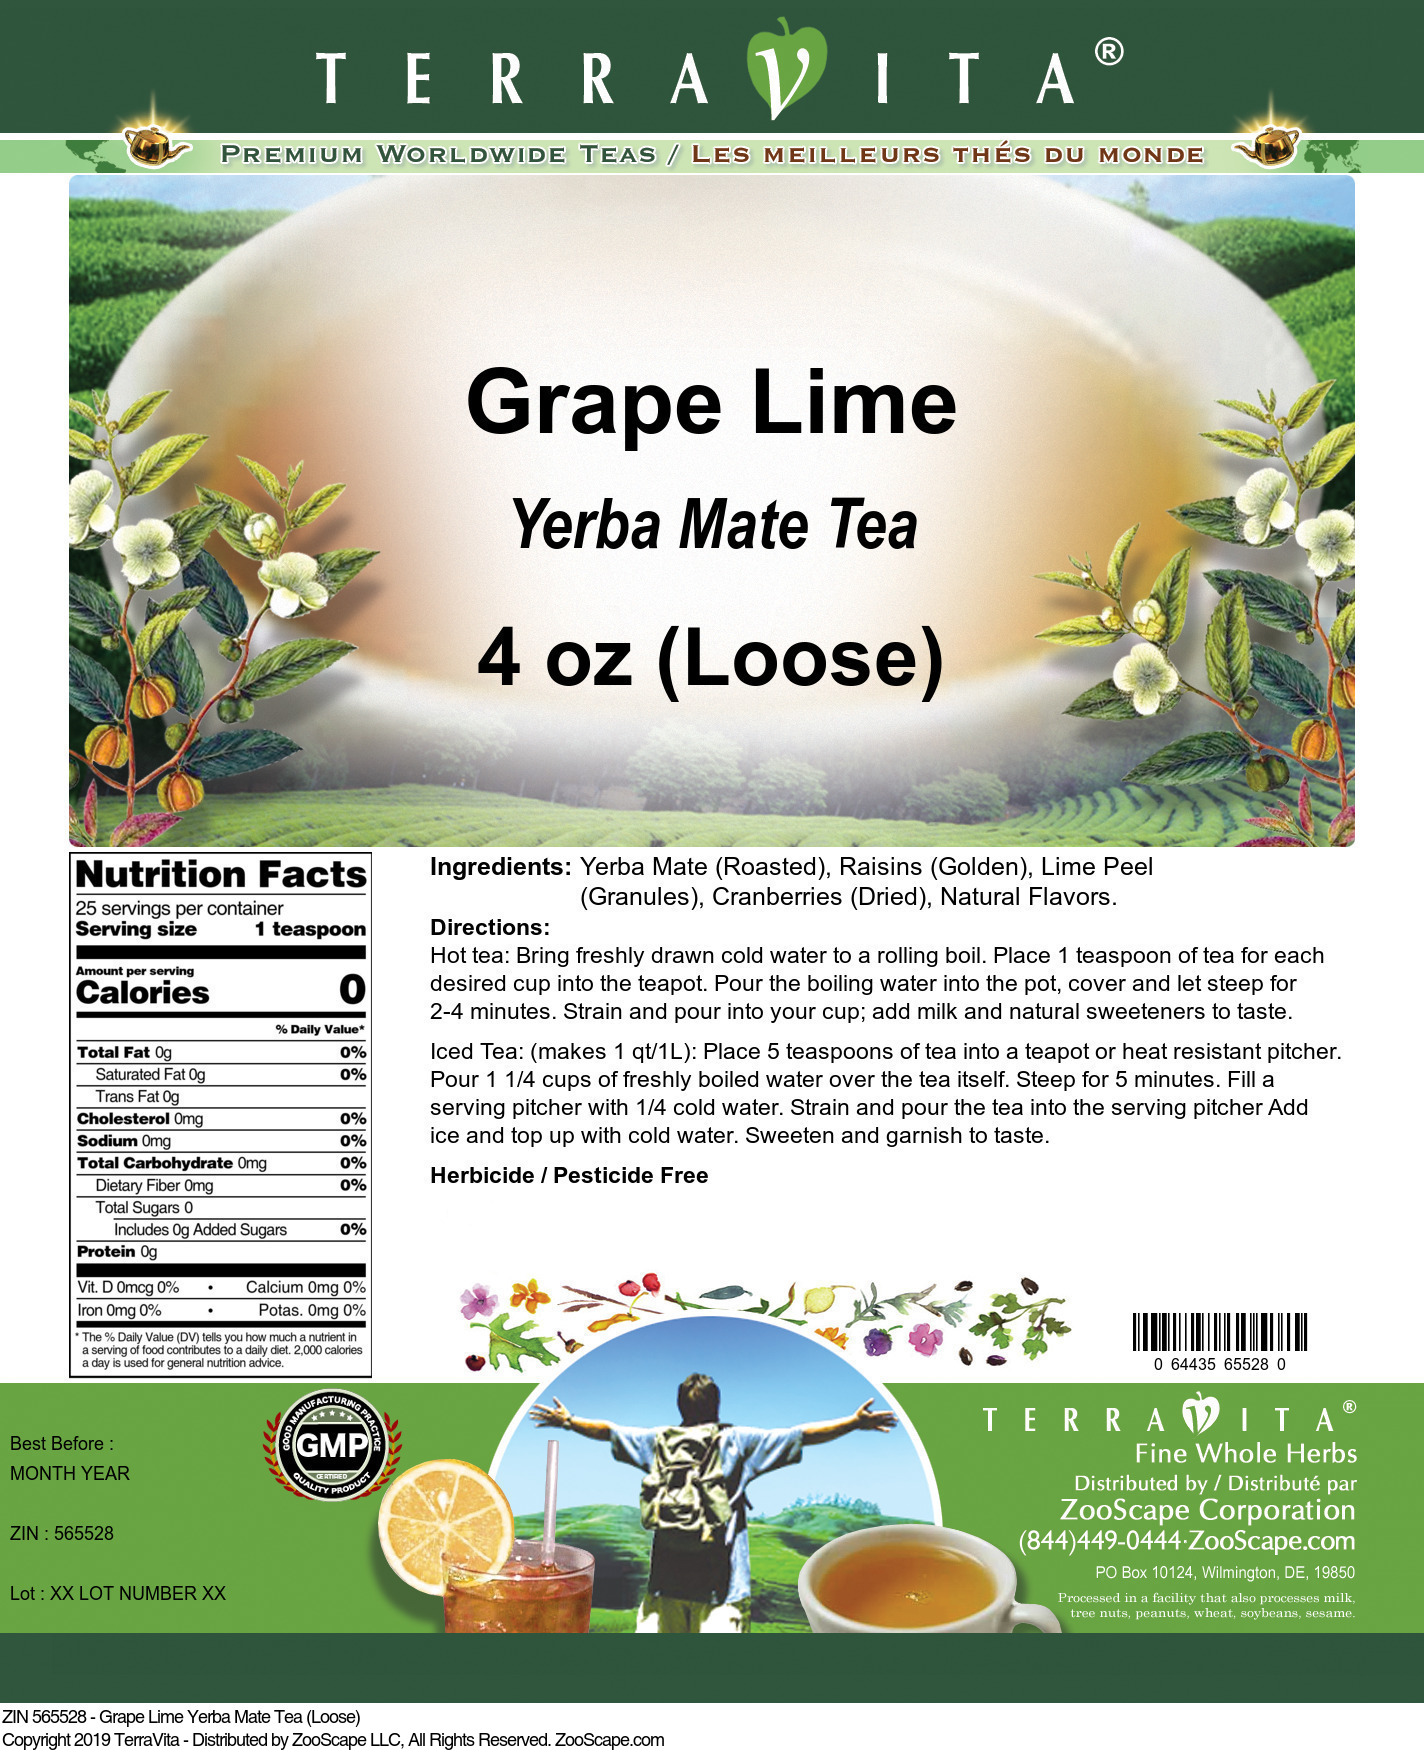 Grape Lime Yerba Mate Tea (Loose) - Label